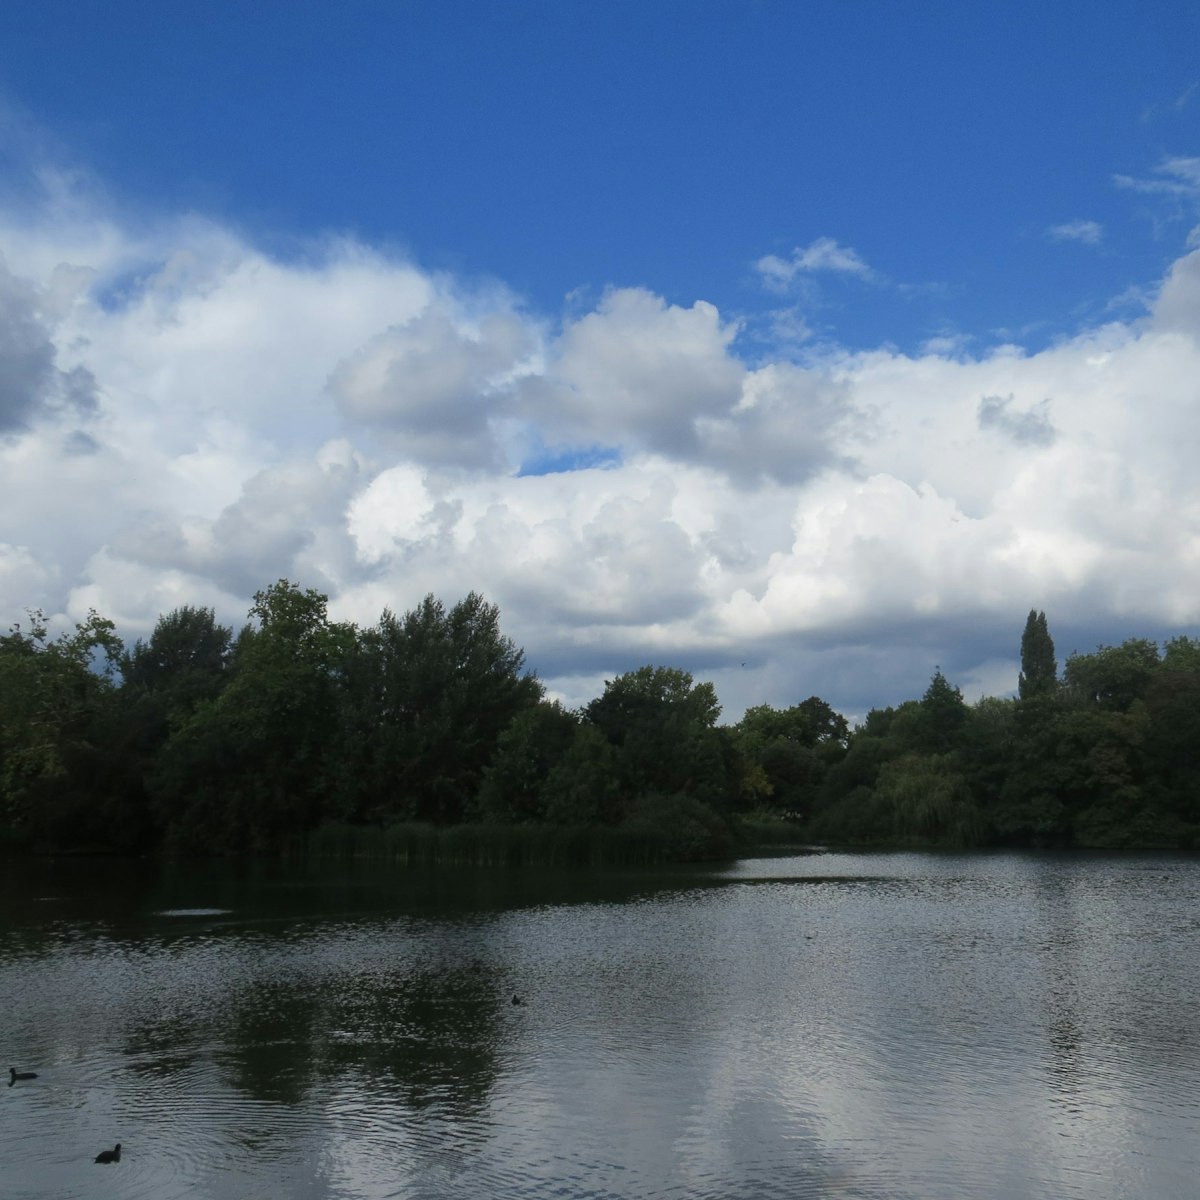 The lake inside Battersea Park